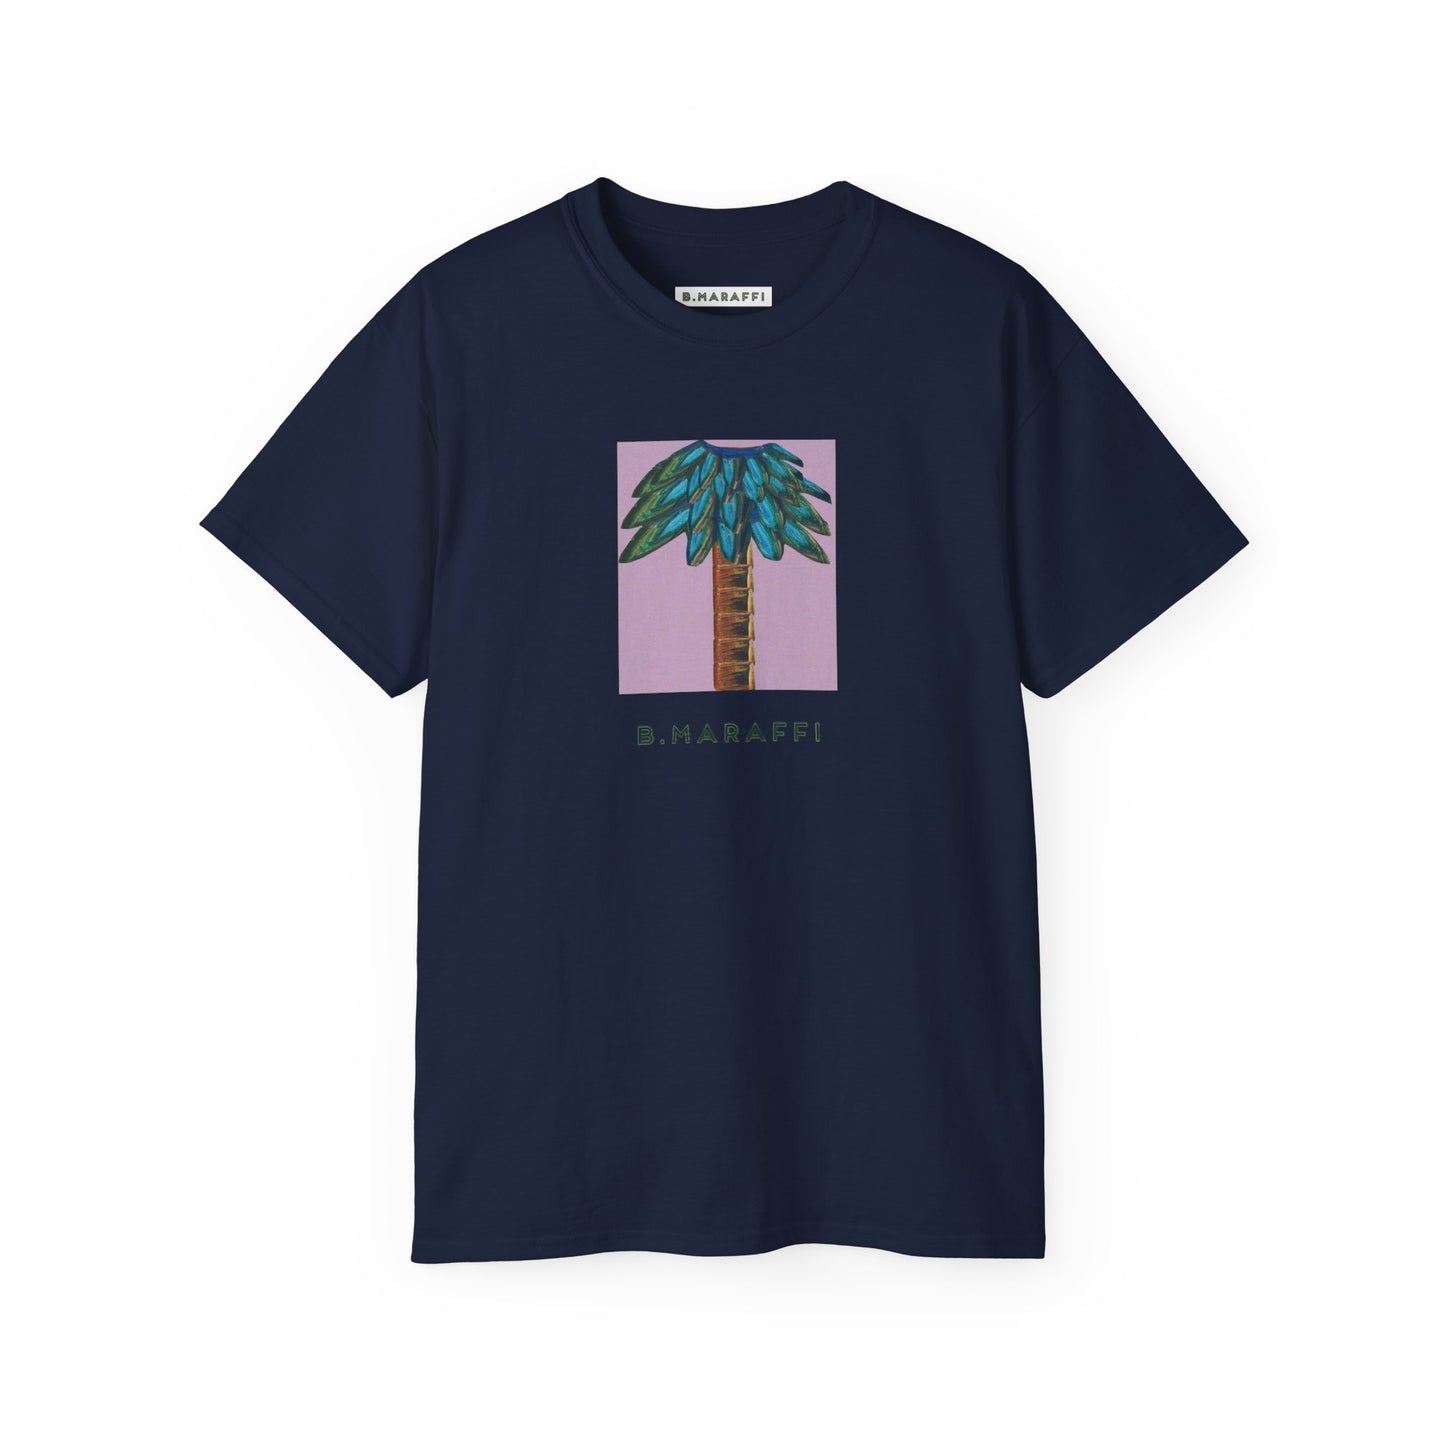 B.Maraffi Cotton T-shirt - Tiki Palm Violet